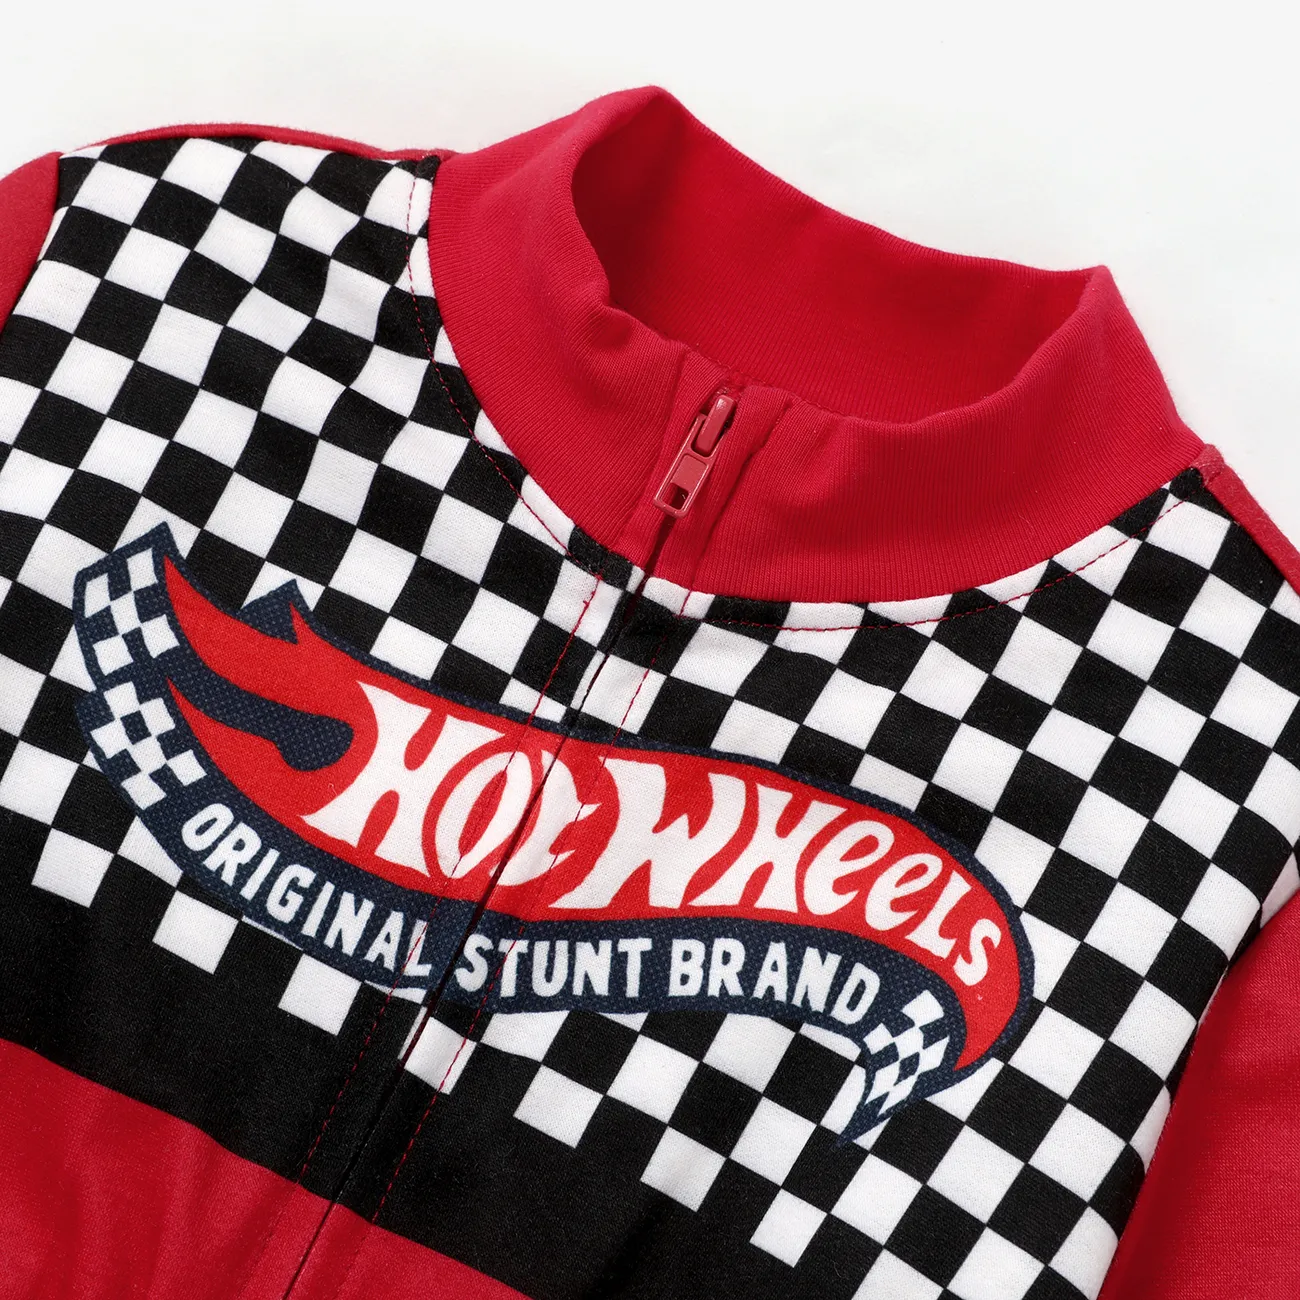 Hot Wheels Toddler Boy Colorblock Logo Print Long-sleeve Racing Jumpsuit Red big image 1